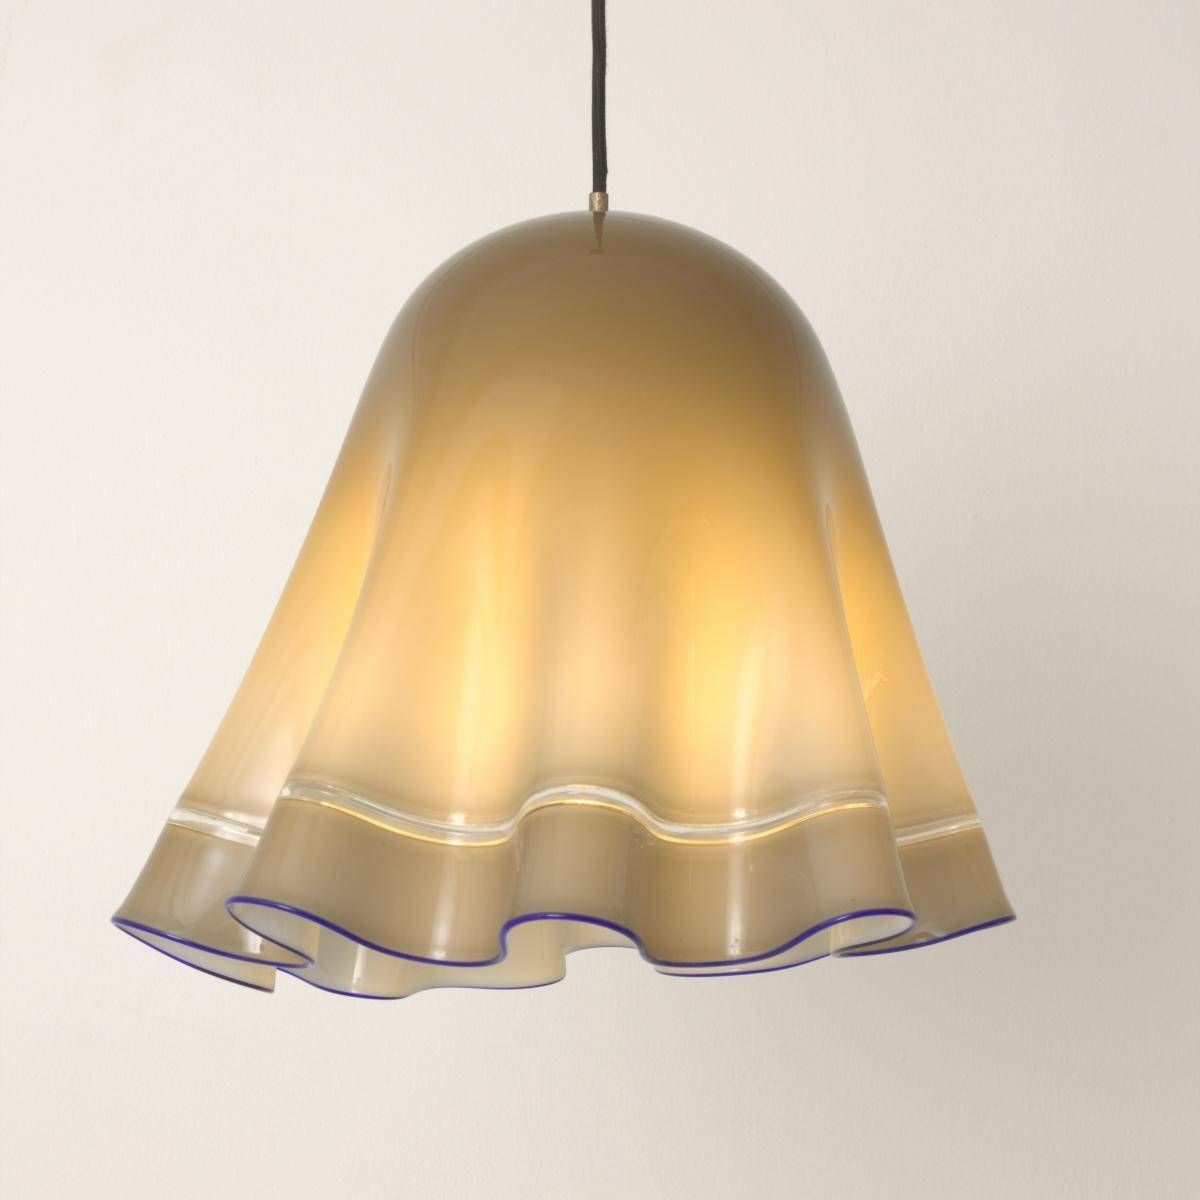 Vintage Grey & Blue Murano Glass Pendant Lamp For Sale At Pamono Inside Murano Glass Lighting Pendants (View 13 of 15)